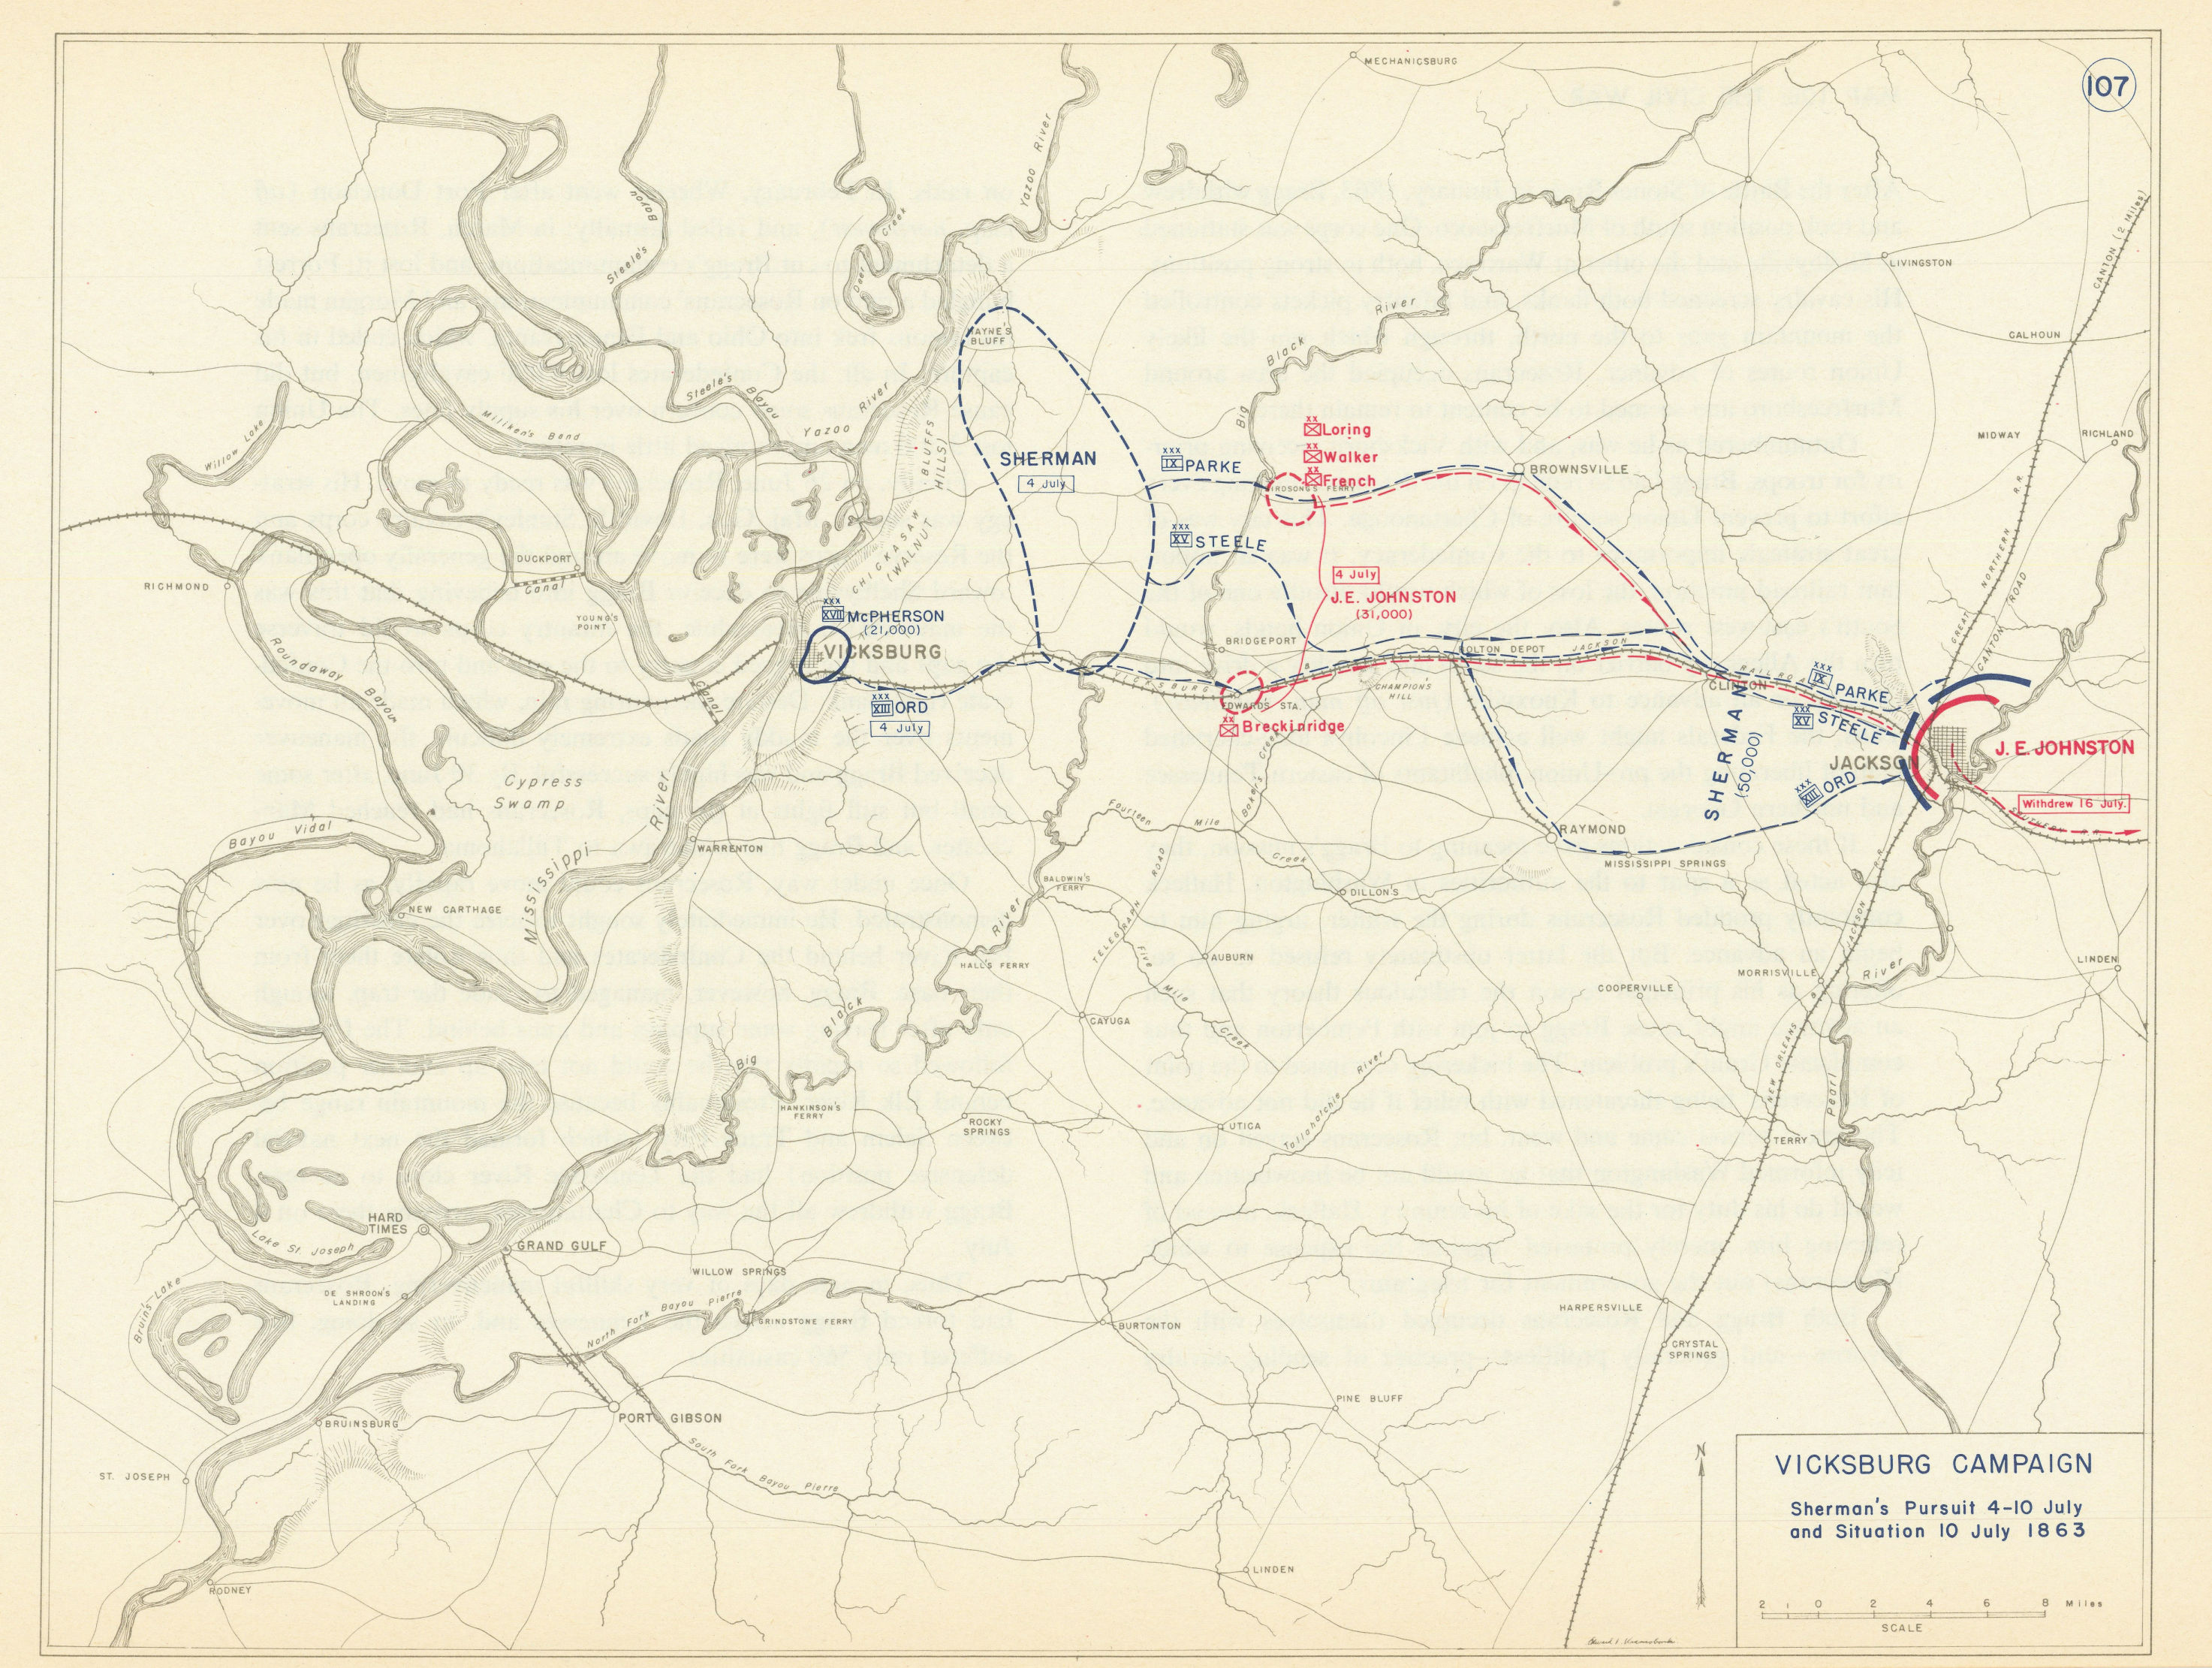 American Civil War 4-10 July 1863 Vicksburg Campaign. Sherman's Pursuit 1959 map